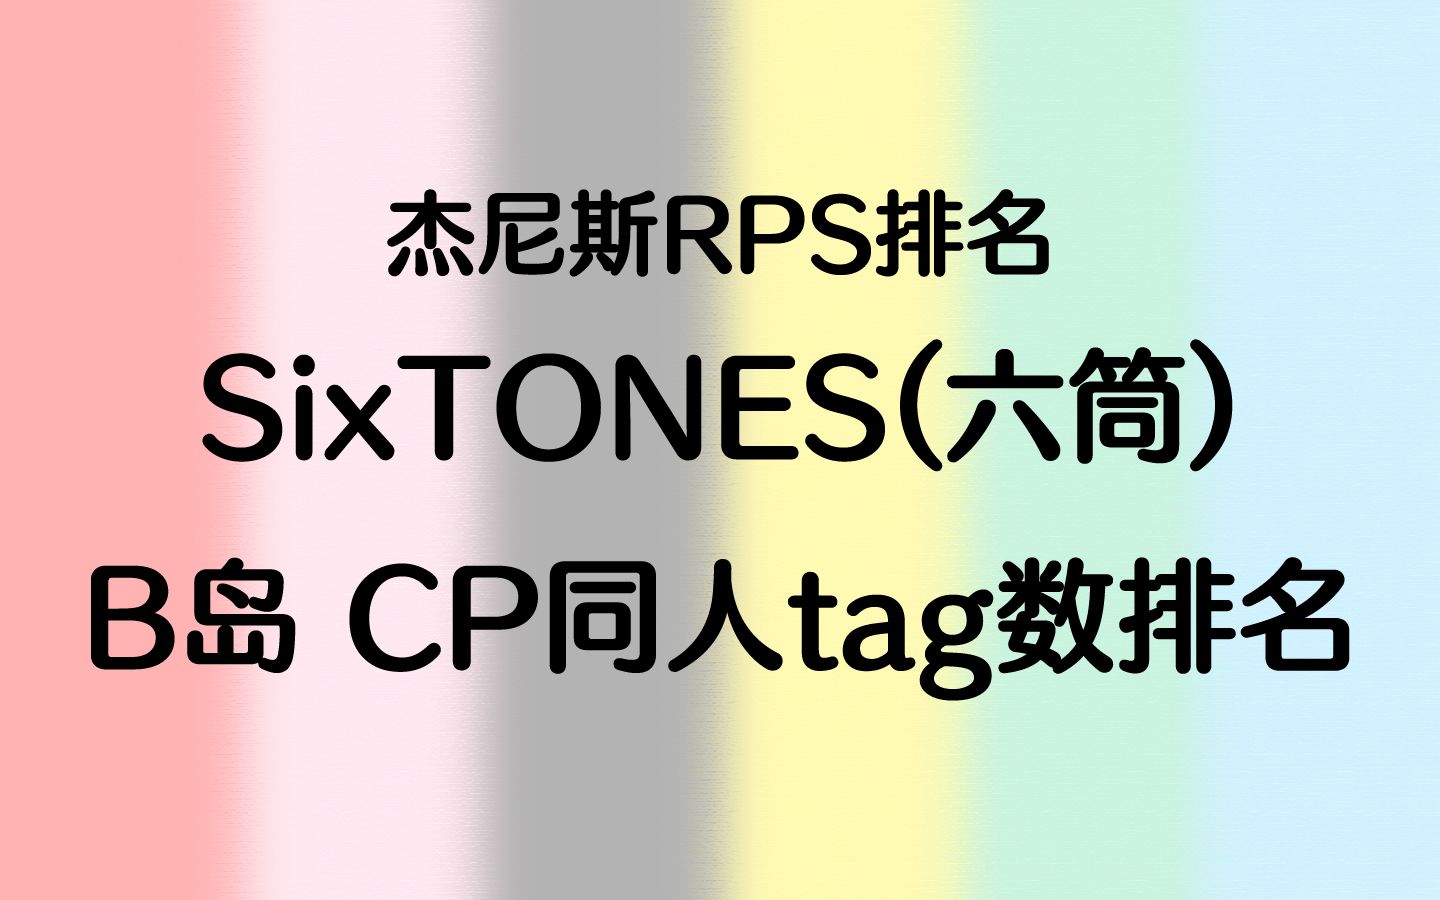 【杰尼斯RPS排名】B岛 SixTONES(六筒)CP同人tag数排名